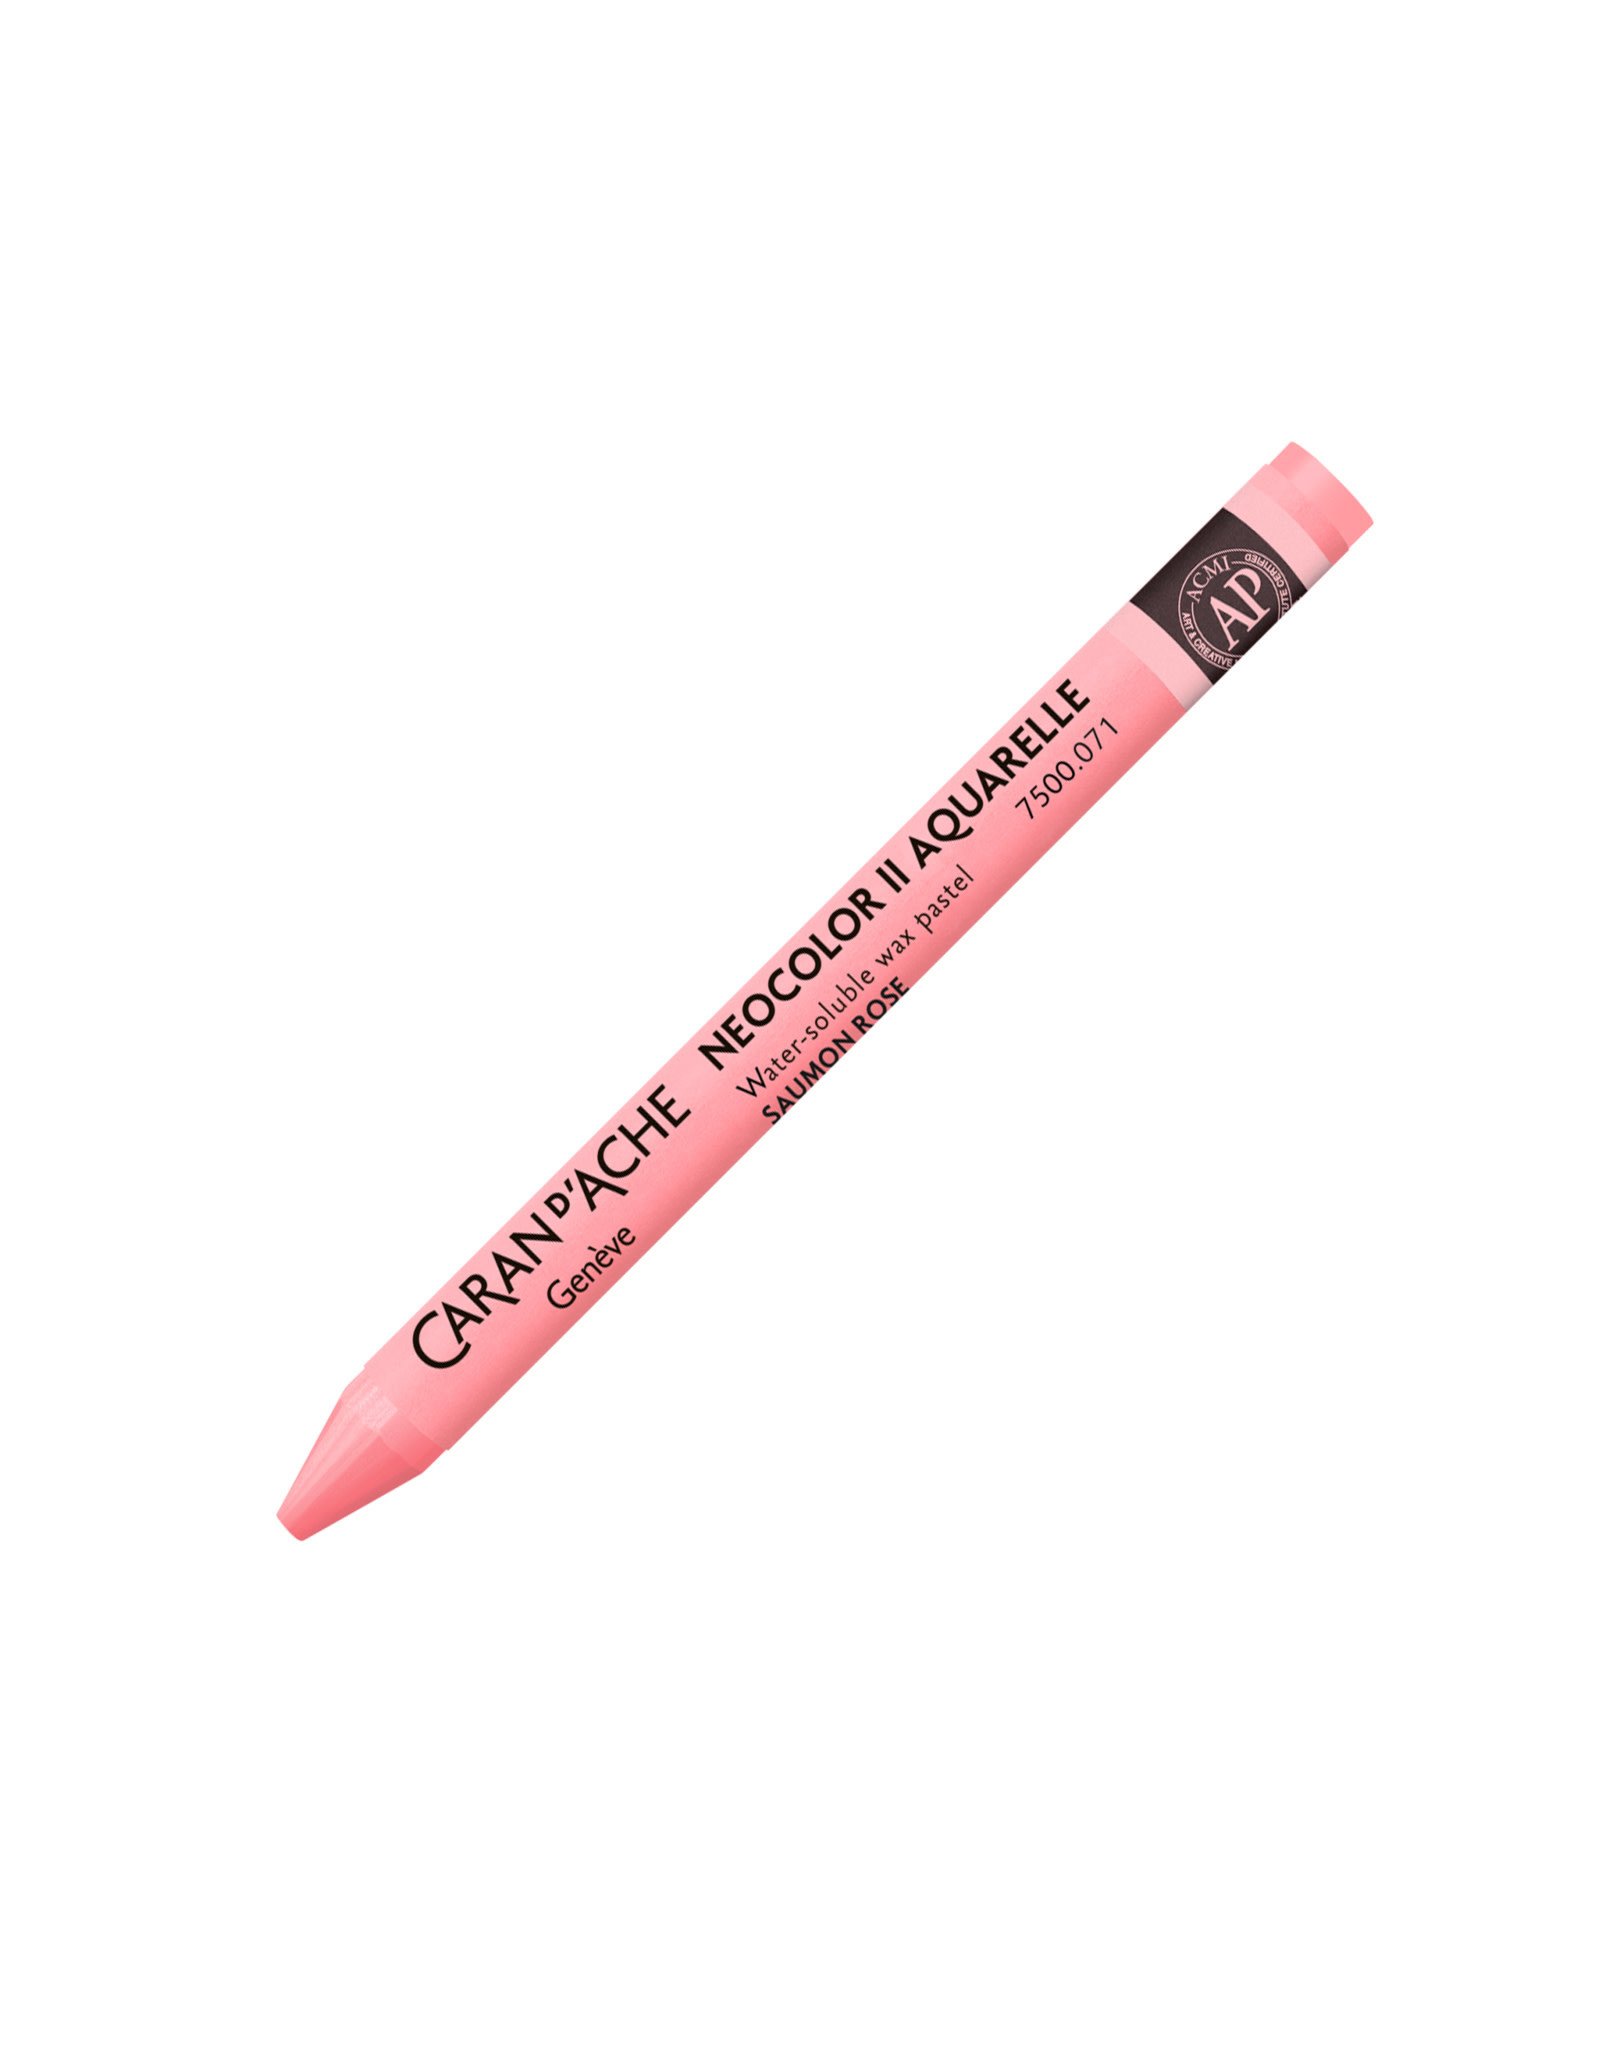 Caran d'Ache Neocolor II Crayons Aquarelle Salmon Pink